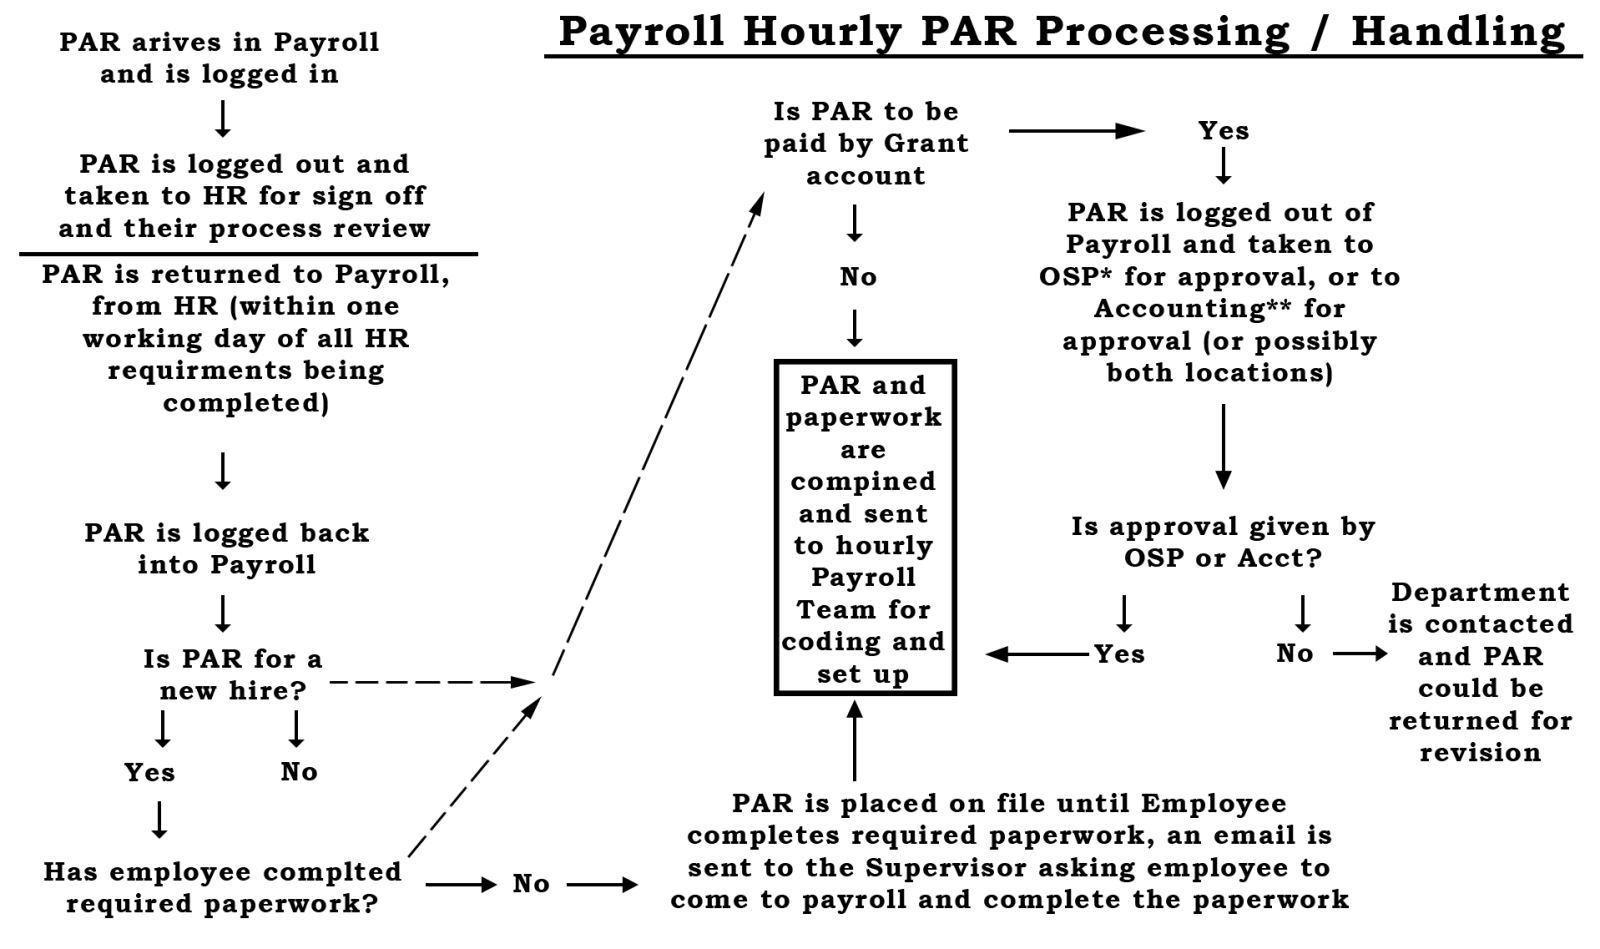 PAR processing and handling